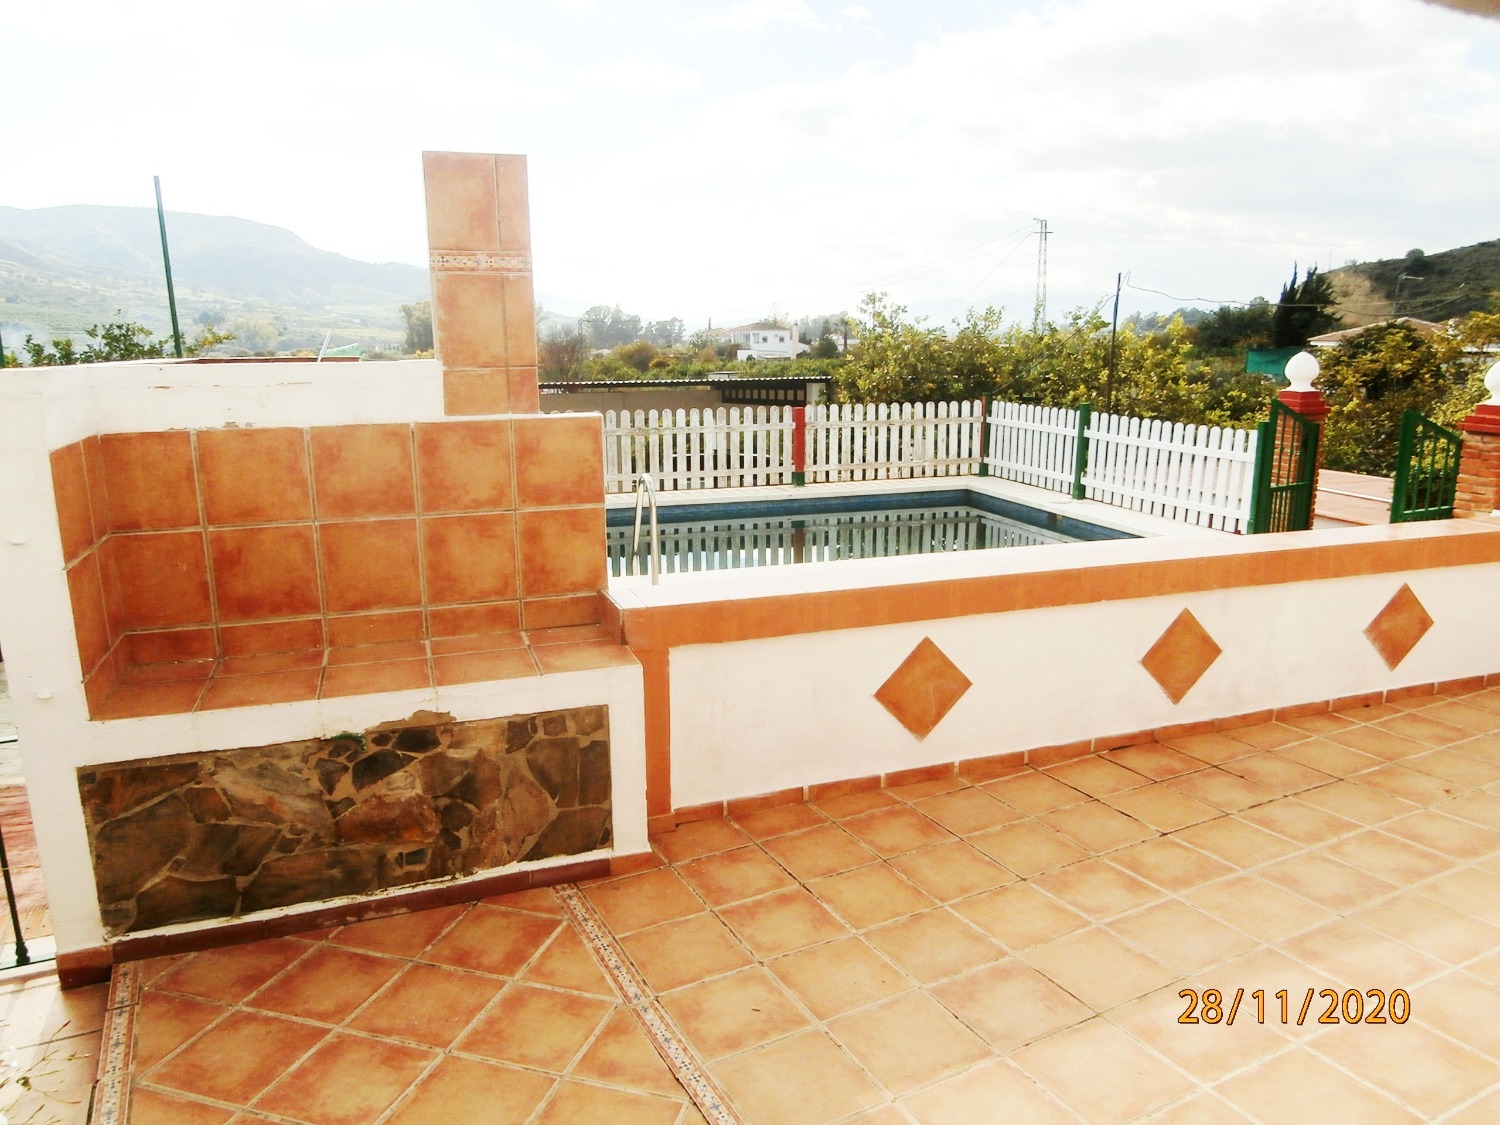 Gran Casa de campo pareada de estilo Andaluz con piscina, terreno cultivable, totalmente vallado 3.220 m2 aprox, buen acceso.